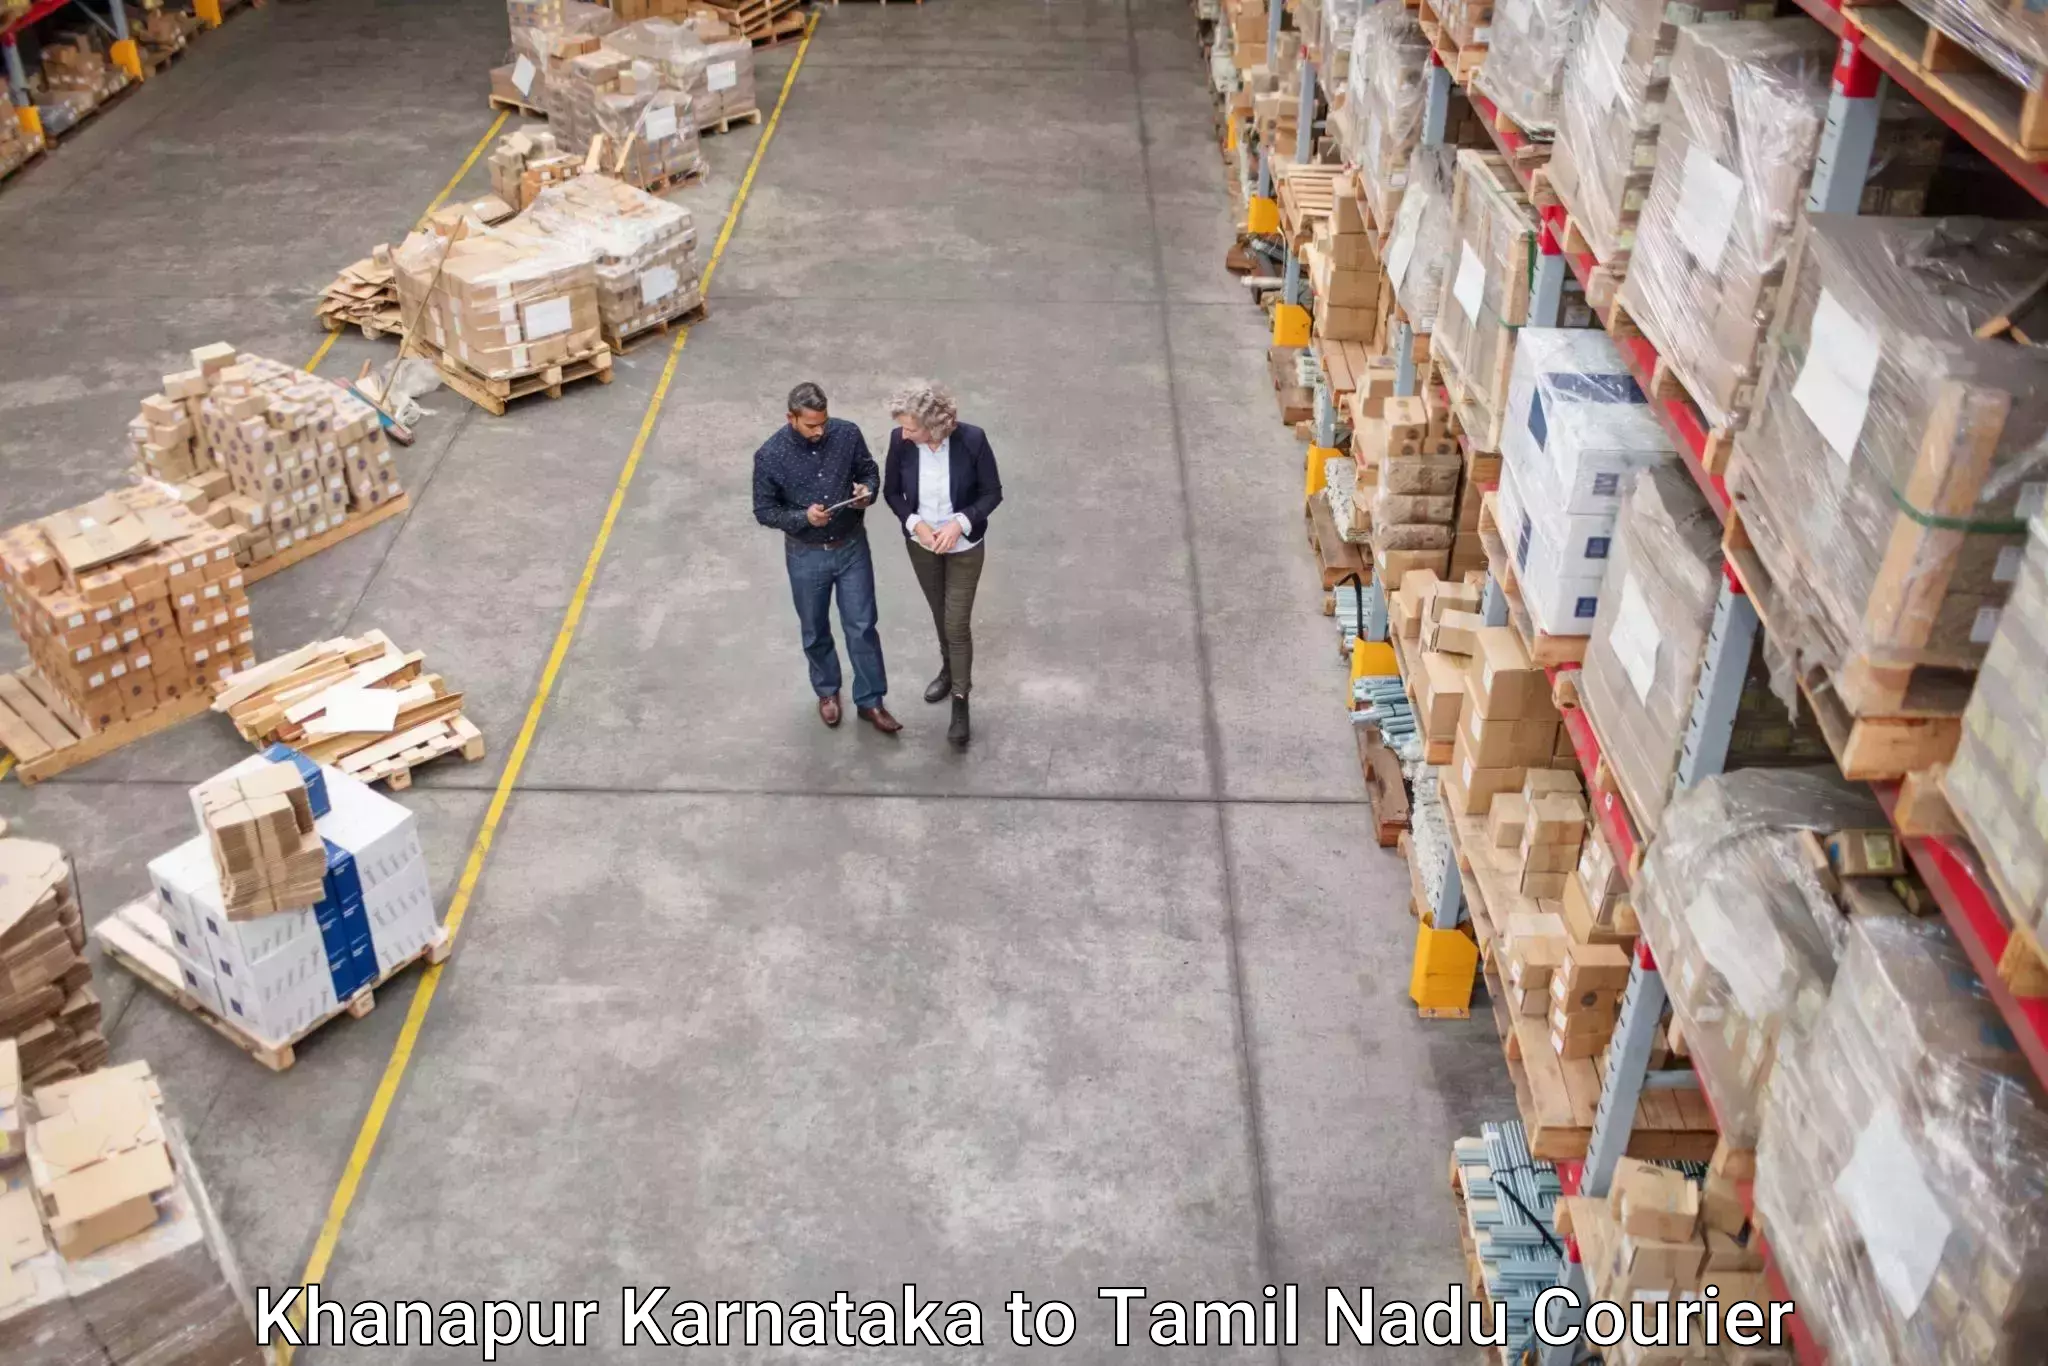 Reliable courier services Khanapur Karnataka to Arakkonam